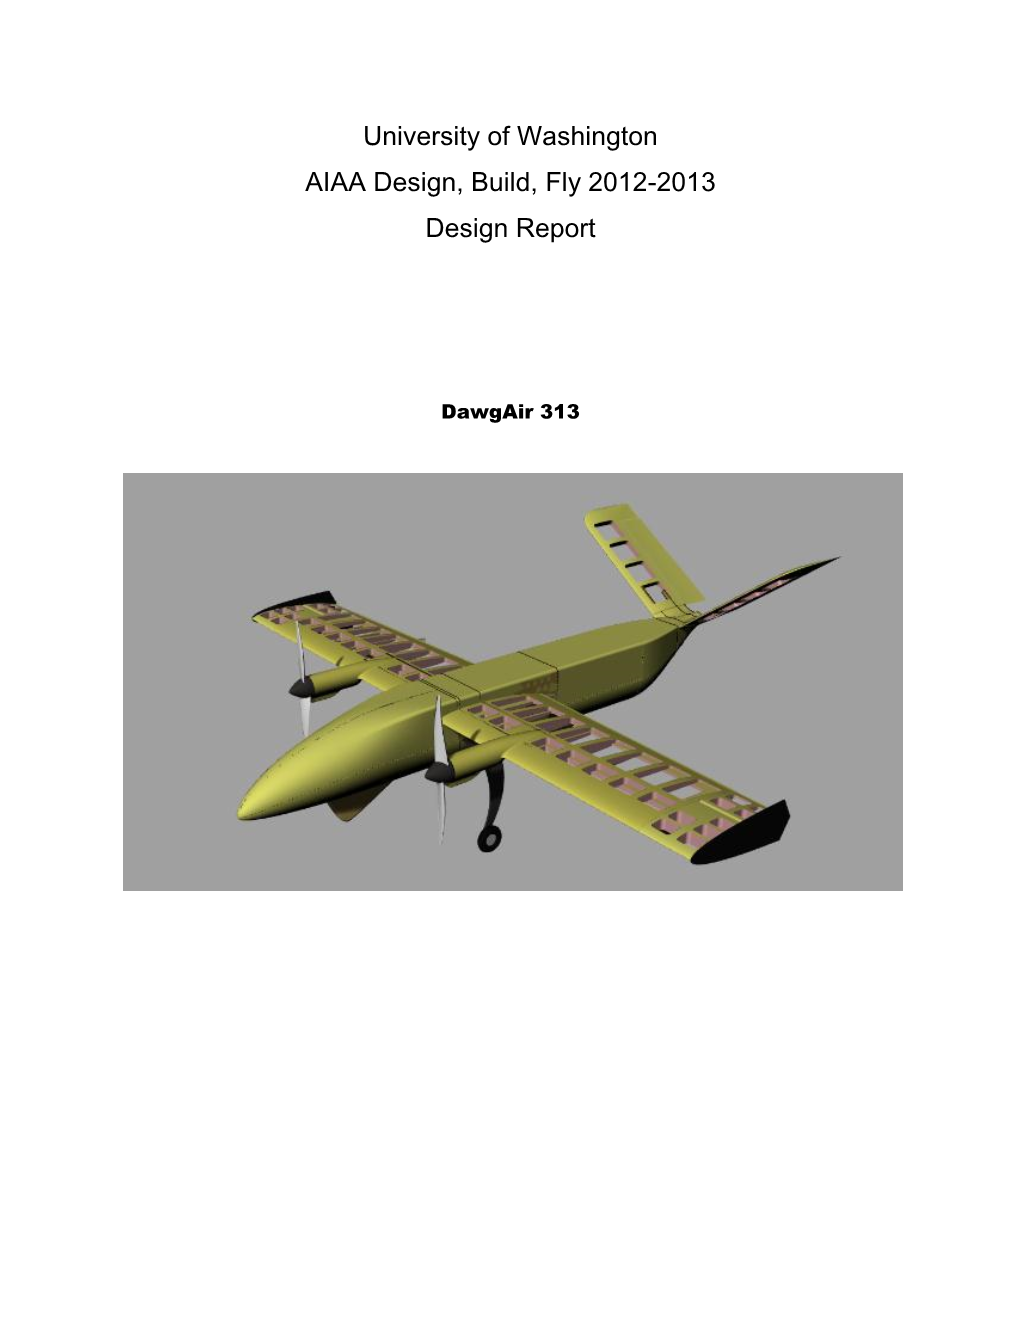 University of Washington AIAA Design, Build, Fly 2012-2013 Design Report